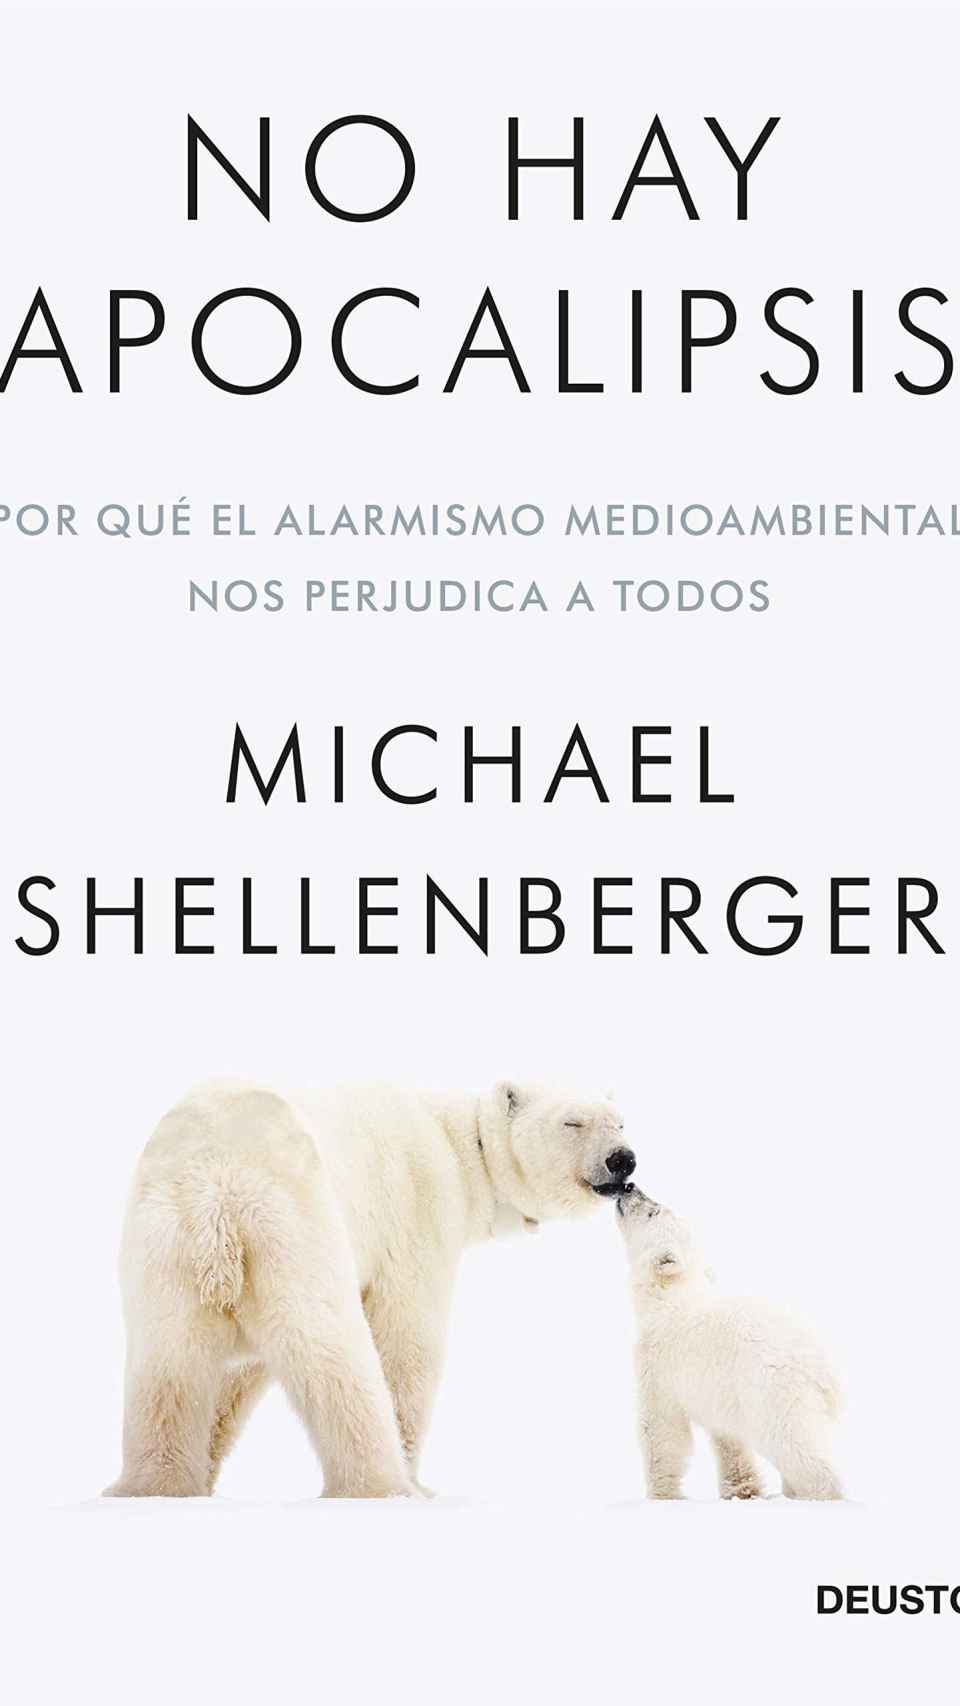 No hay apocalipsis, de Michael Shellenberger.